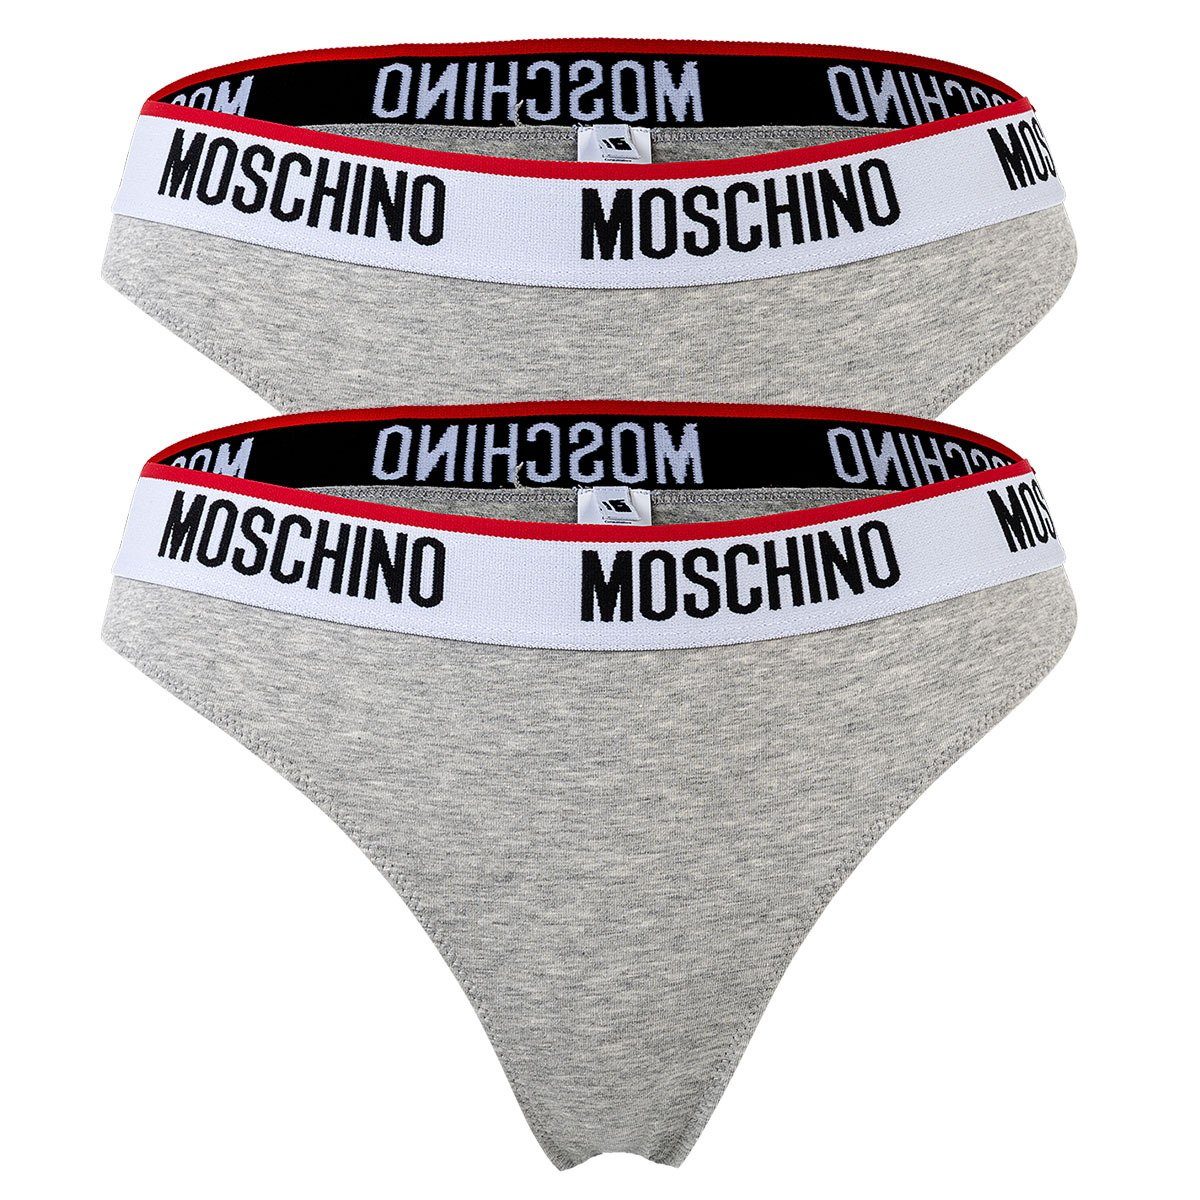 Moschino Slip Damen Slips 2er Pack - Briefs, Unterhose, Cotton Grau meliert